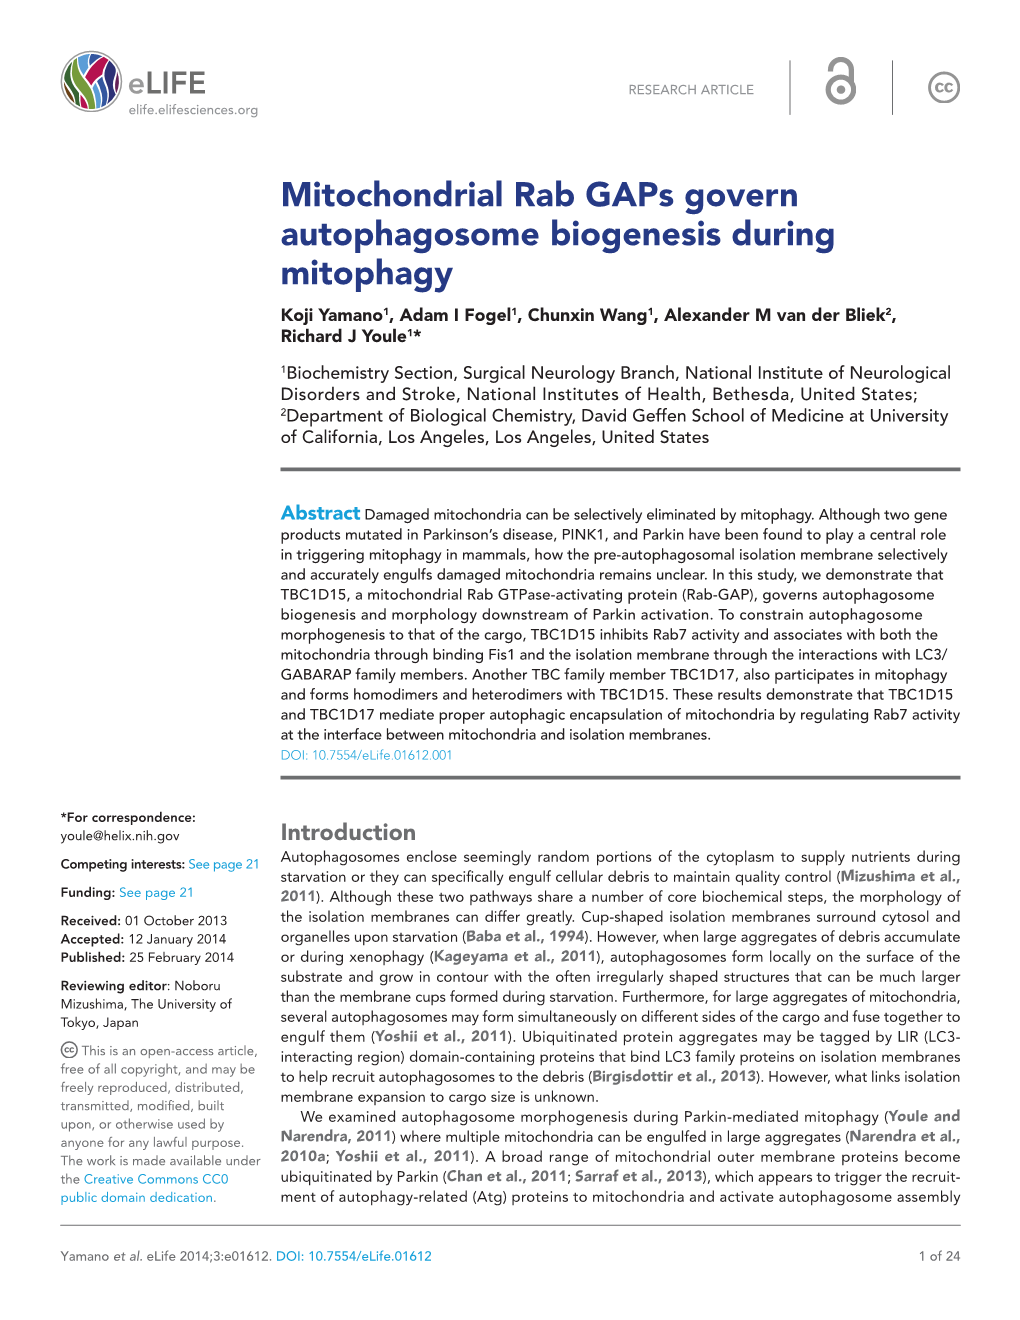 Mitochondrial Rab Gaps Govern Autophagosome Biogenesis During Mitophagy Koji Yamano1, Adam I Fogel1, Chunxin Wang1, Alexander M Van Der Bliek2, Richard J Youle1*